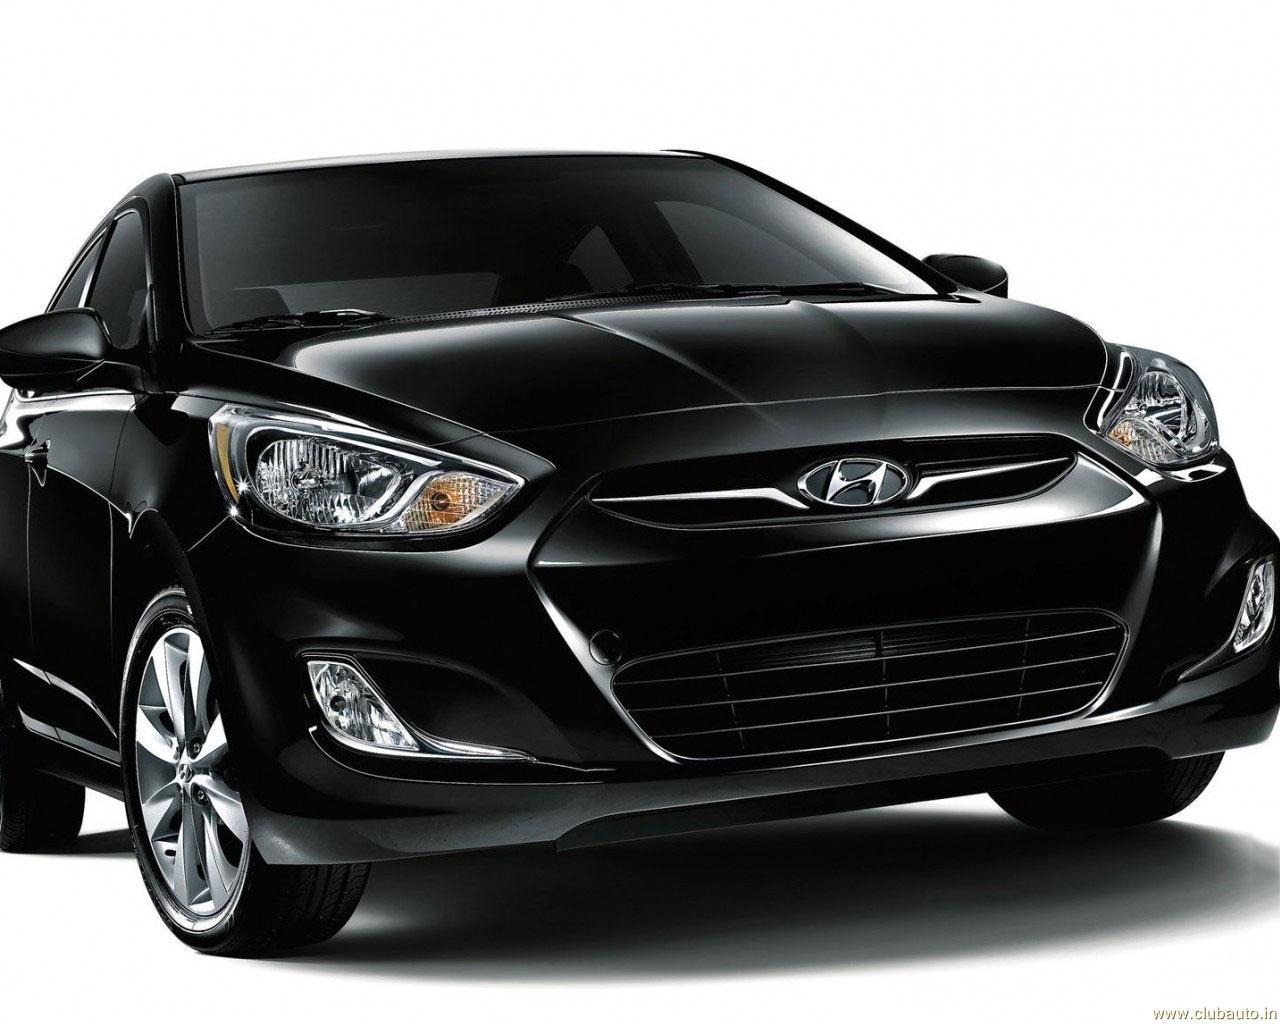 Hyundai Verna Wallpapers - Top Free Hyundai Verna Backgrounds